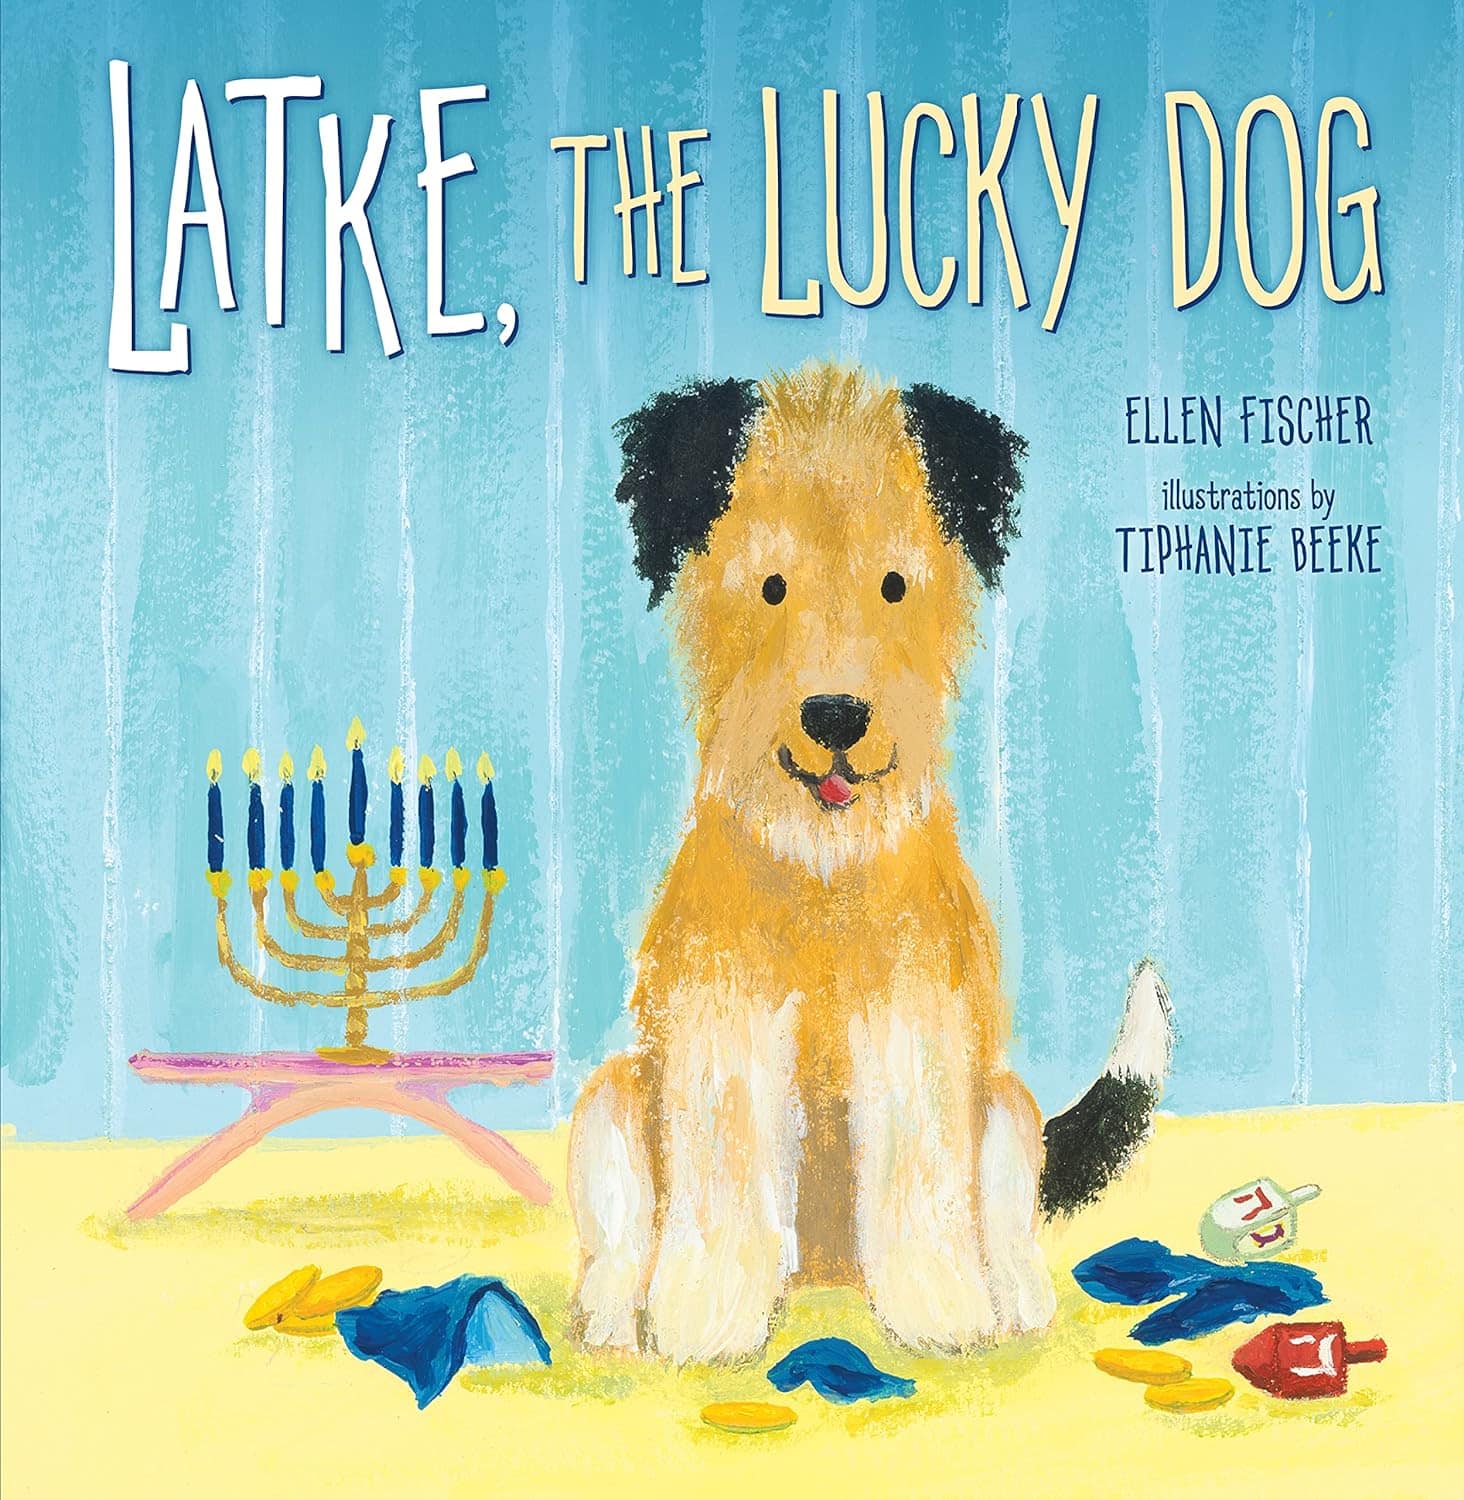 "Latke, The Lucky Dog" by Ellen Fischer